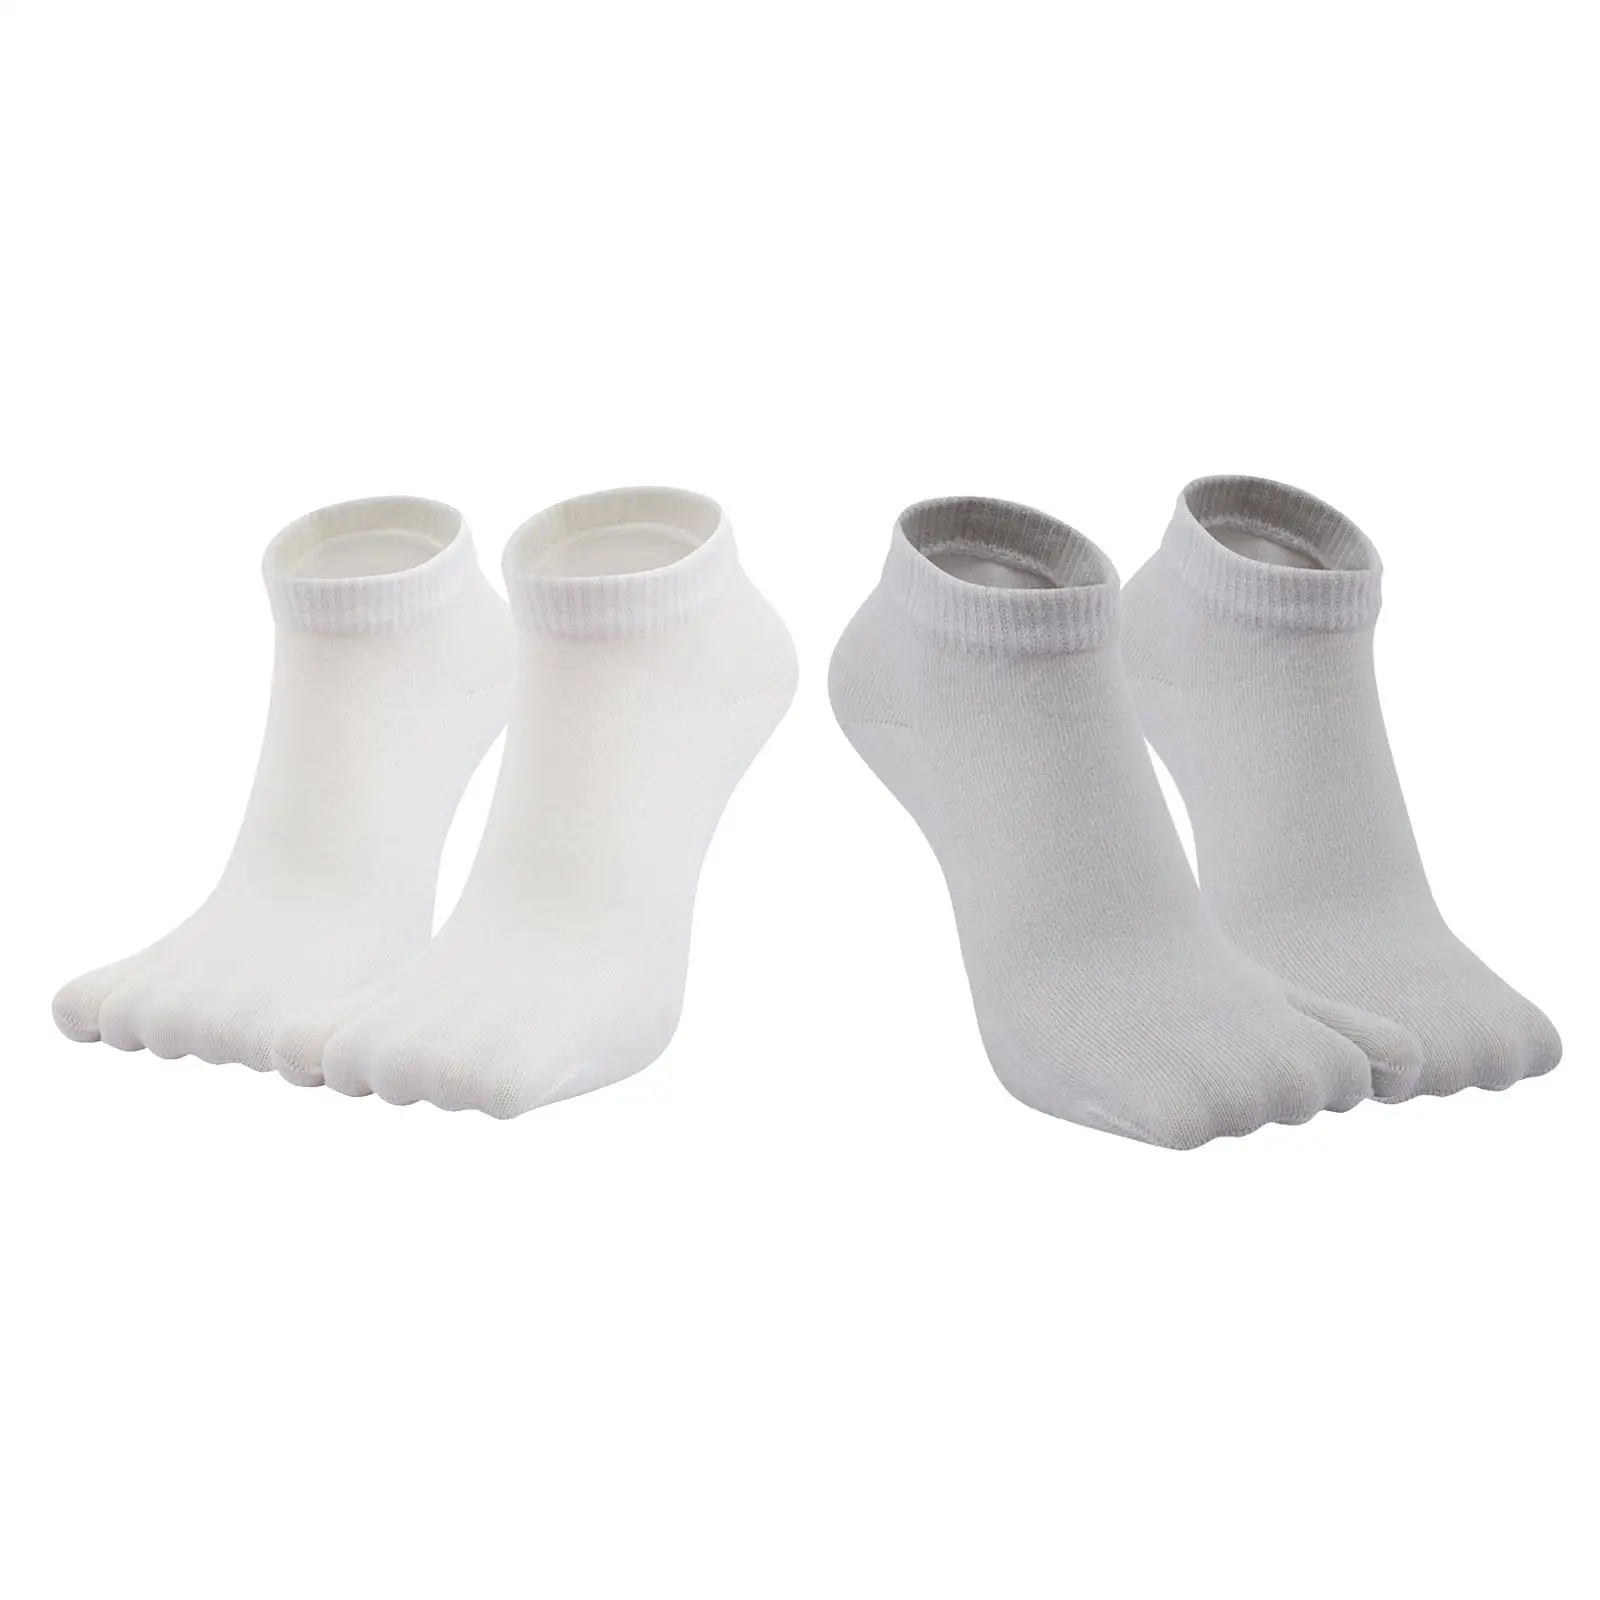 Japanese Style Flip Flop Socks Sandal Socks Clog Socks Non Slip Comfortable 2 Toe Socks Yoga Accessories